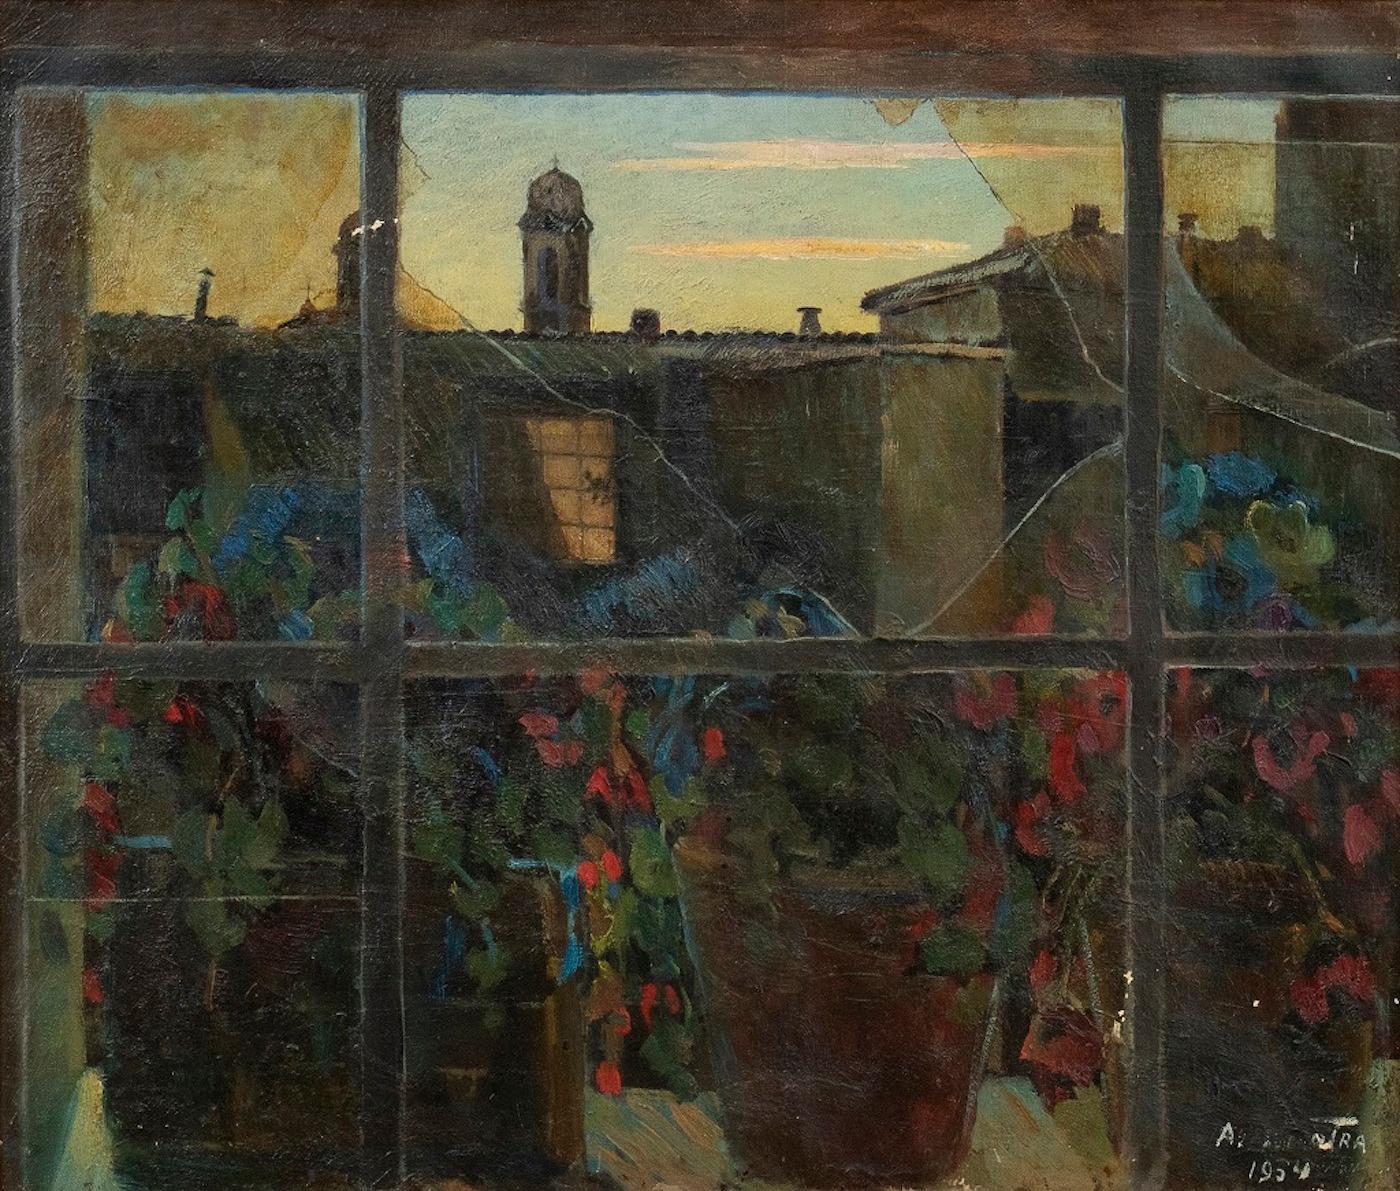 View of Via Margutta - Original Oil on Canvas by N. da Cosenza - 1954